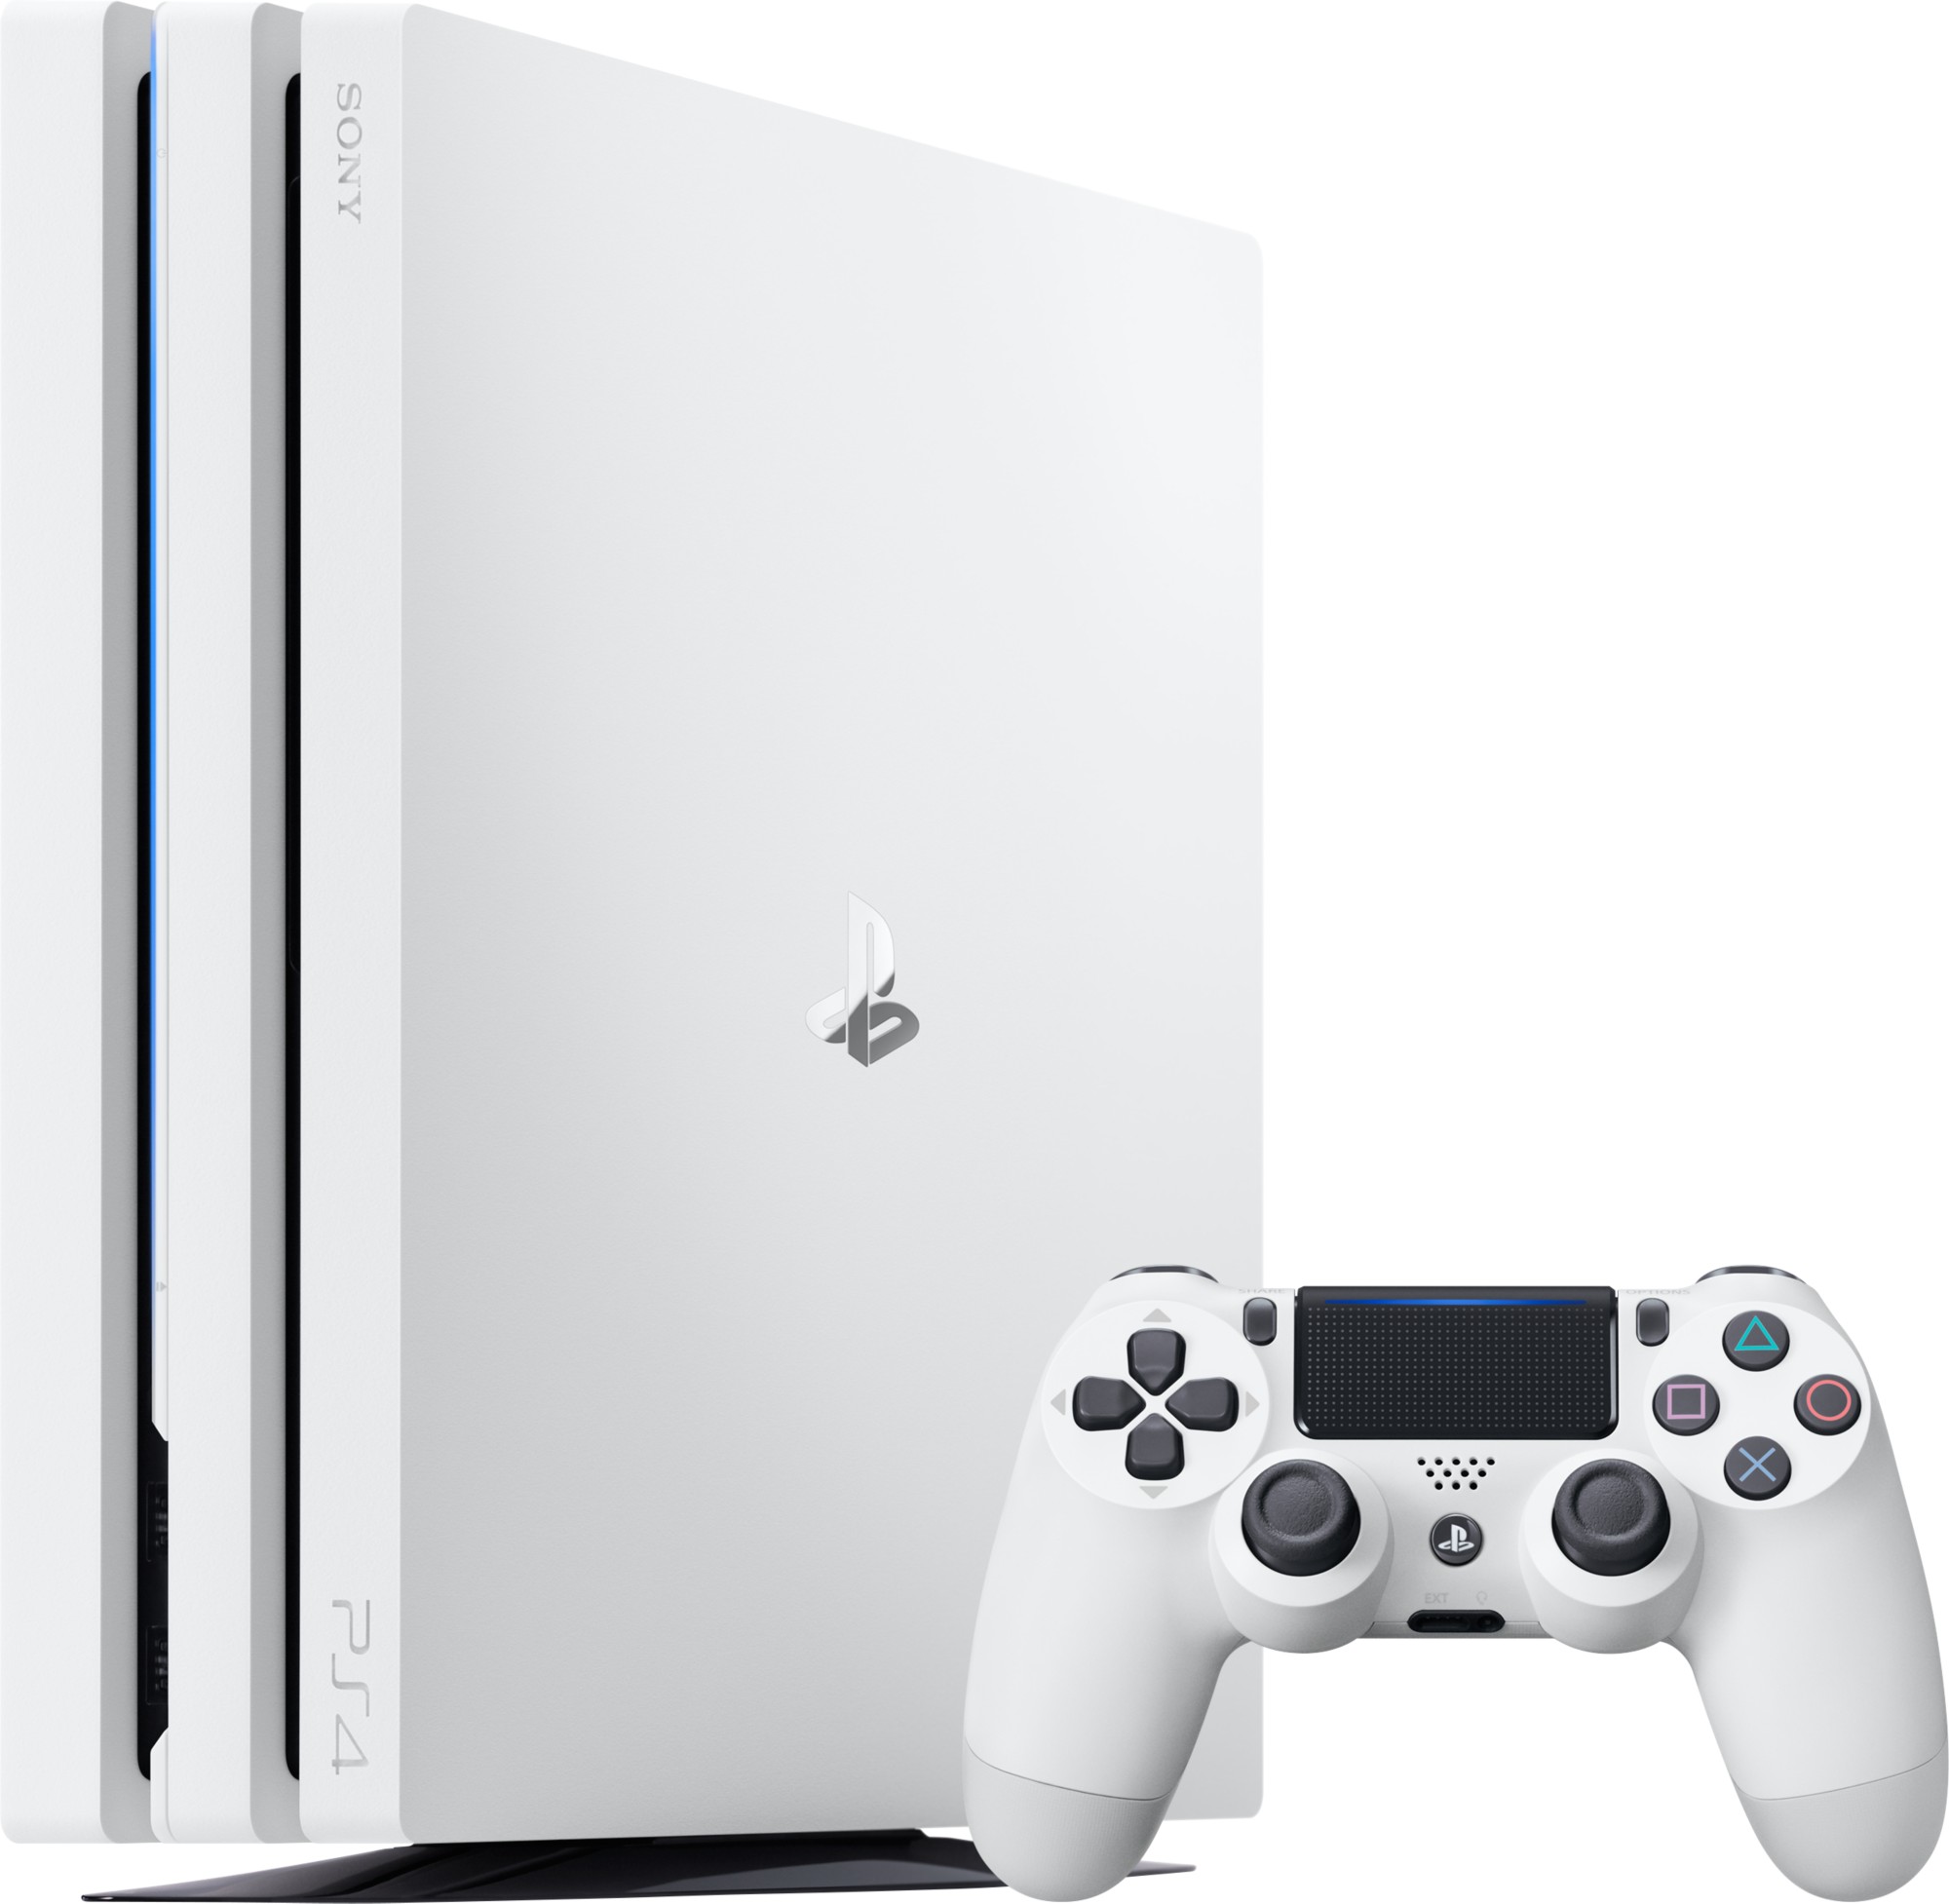 PlayStation 4 Pro (1TB, White, Limited Edition) + Destiny 2